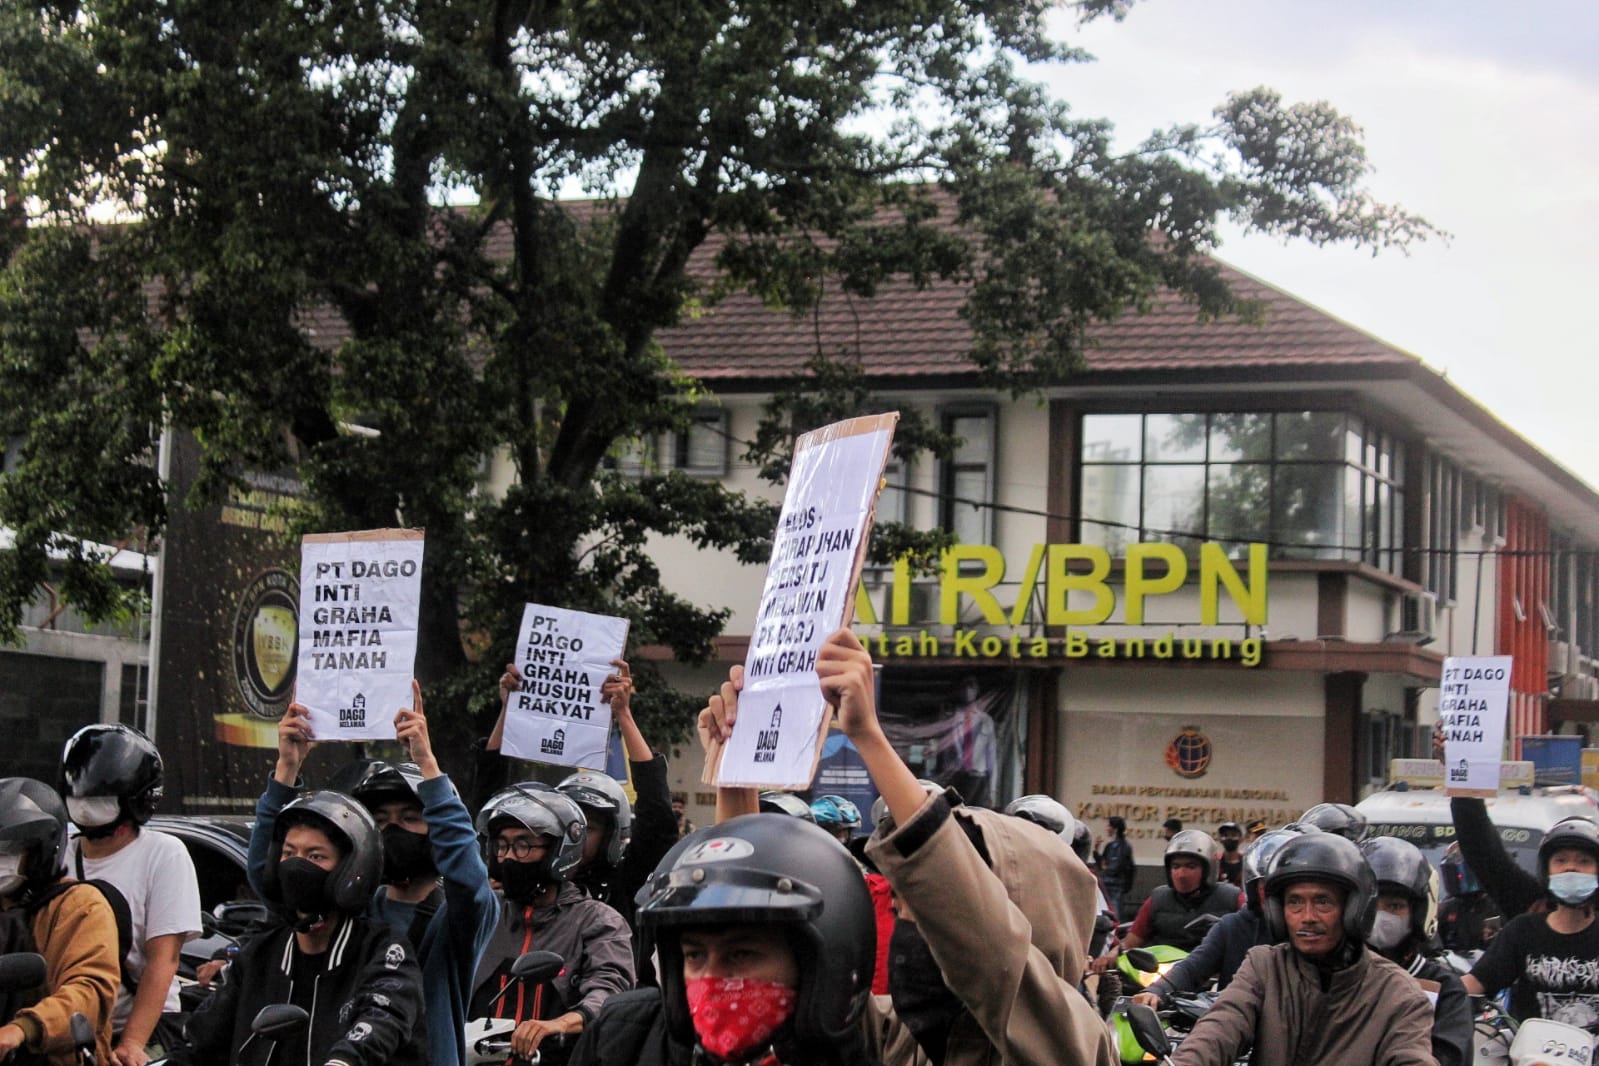 UNJUK RASA: Ratusan warga Dago Elos - Cirapuhan menggeruduk kantor BPN Kota Bandung untuk berunjuk rasa, meminta ketegasan BPN soal sengketa kepemilikan lahan, kemarin. (Deni/Jabar Ekspres)